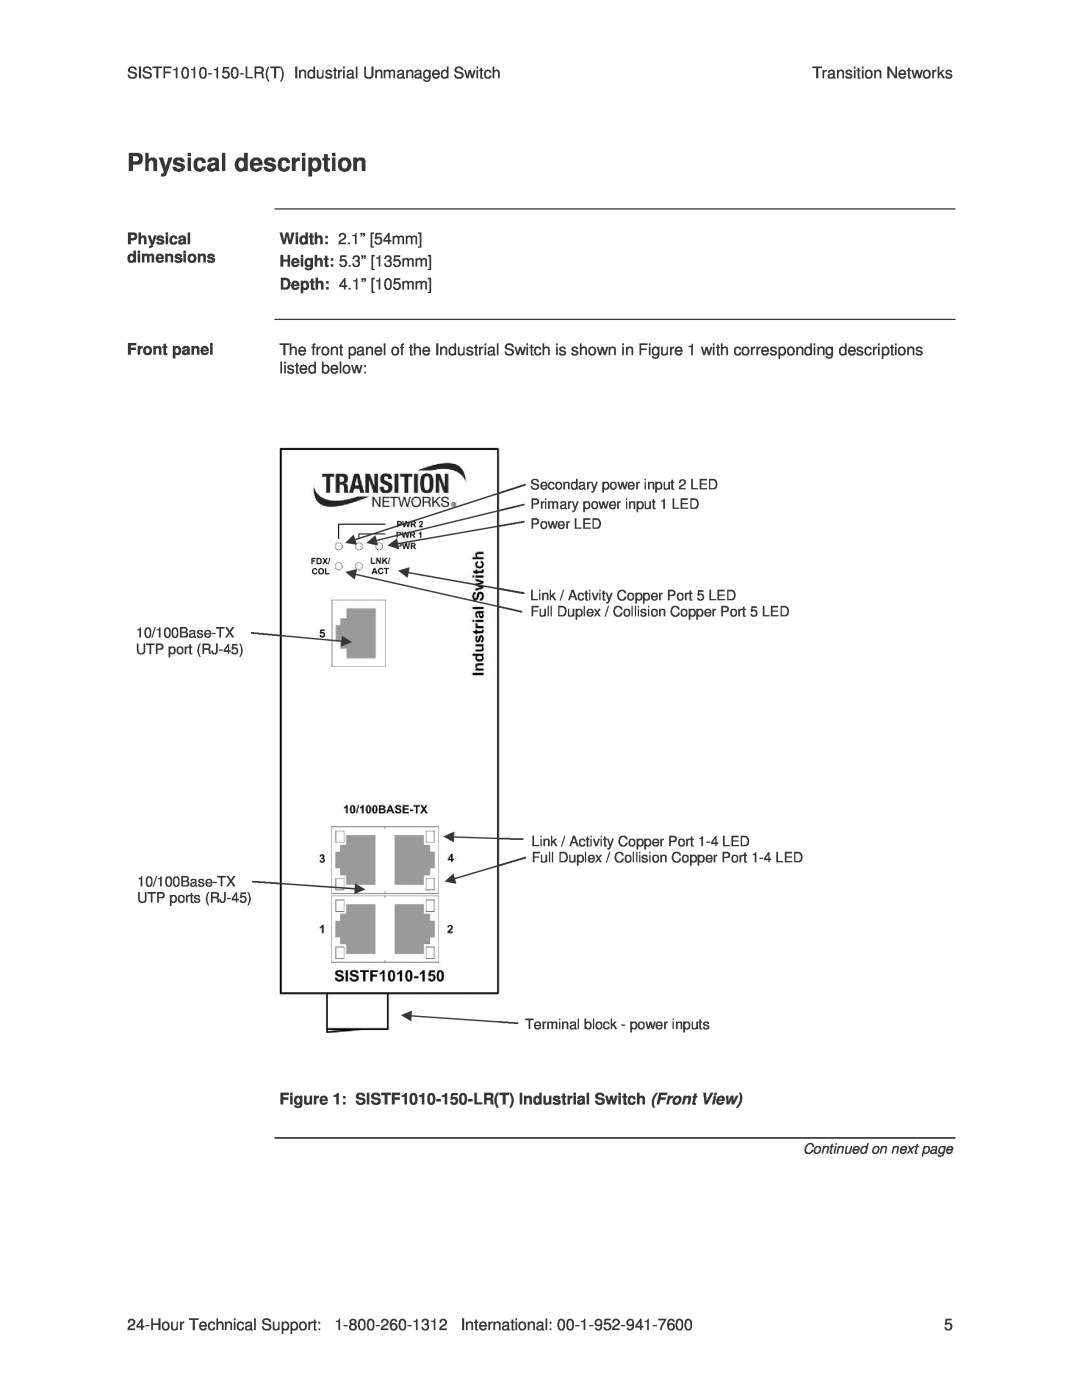 Transition Networks SISTF1010-150-LR(T) installation manual Physical description 